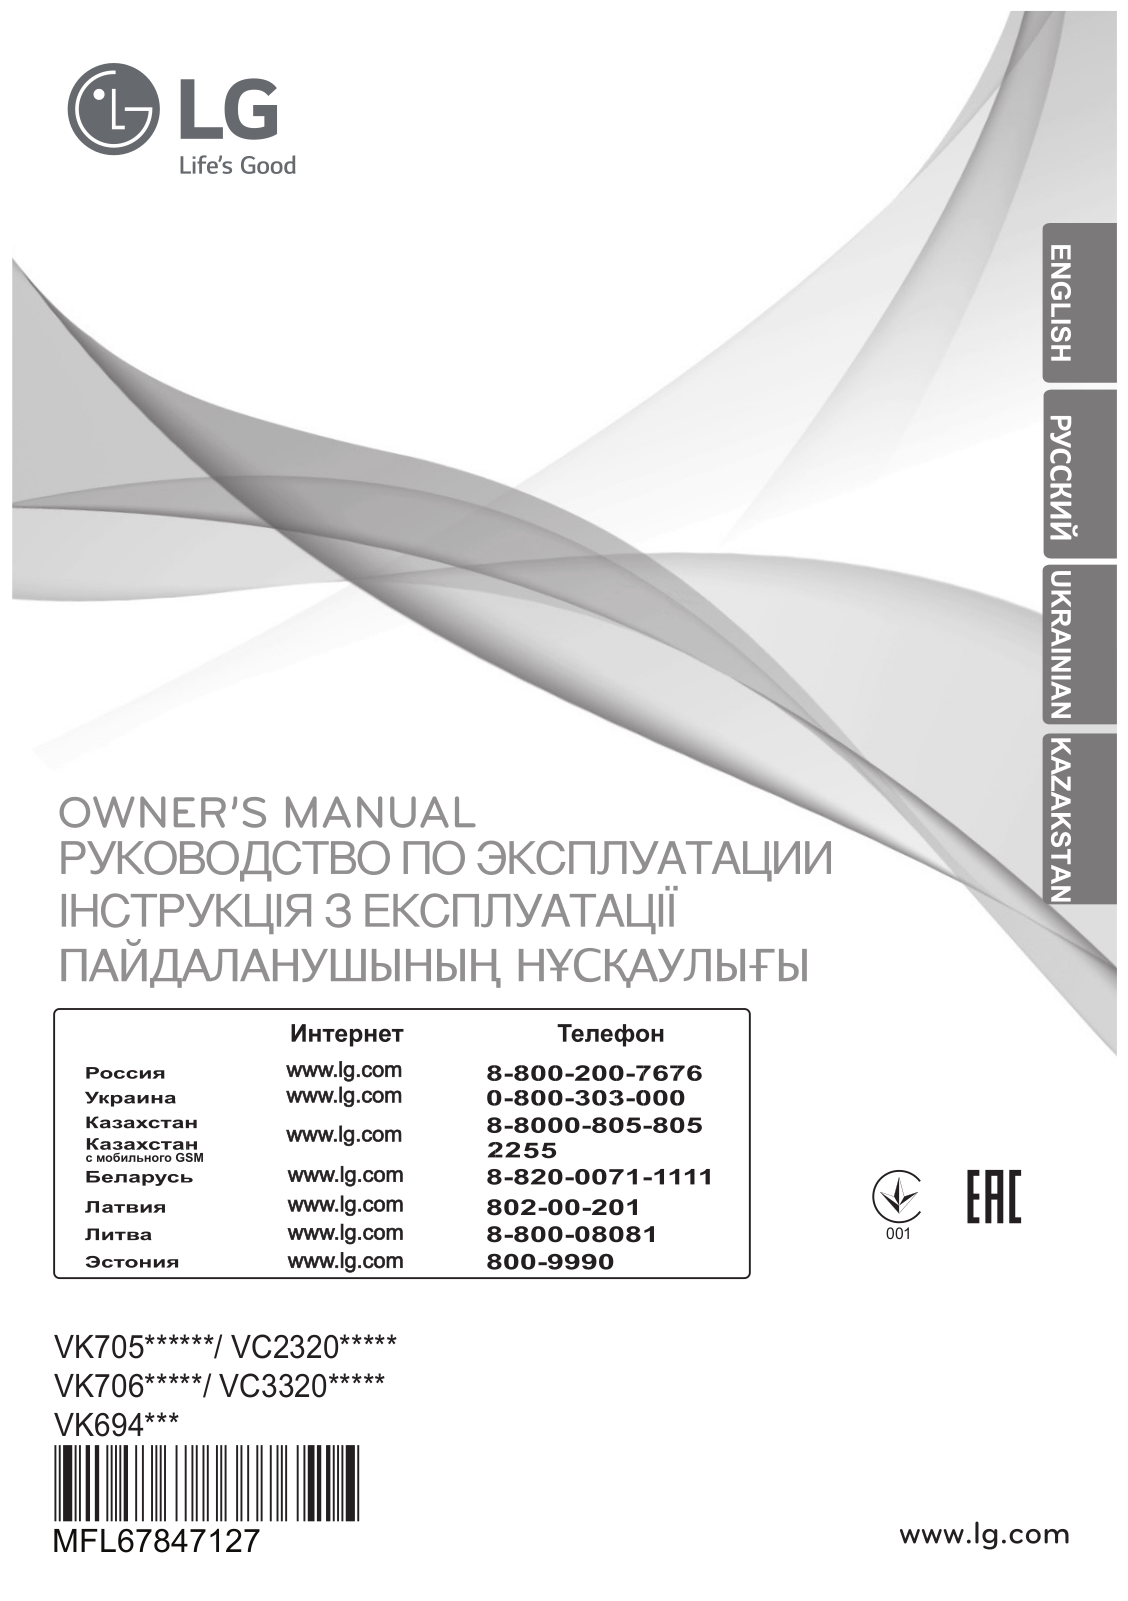 LG VC23200NNDR User Manual